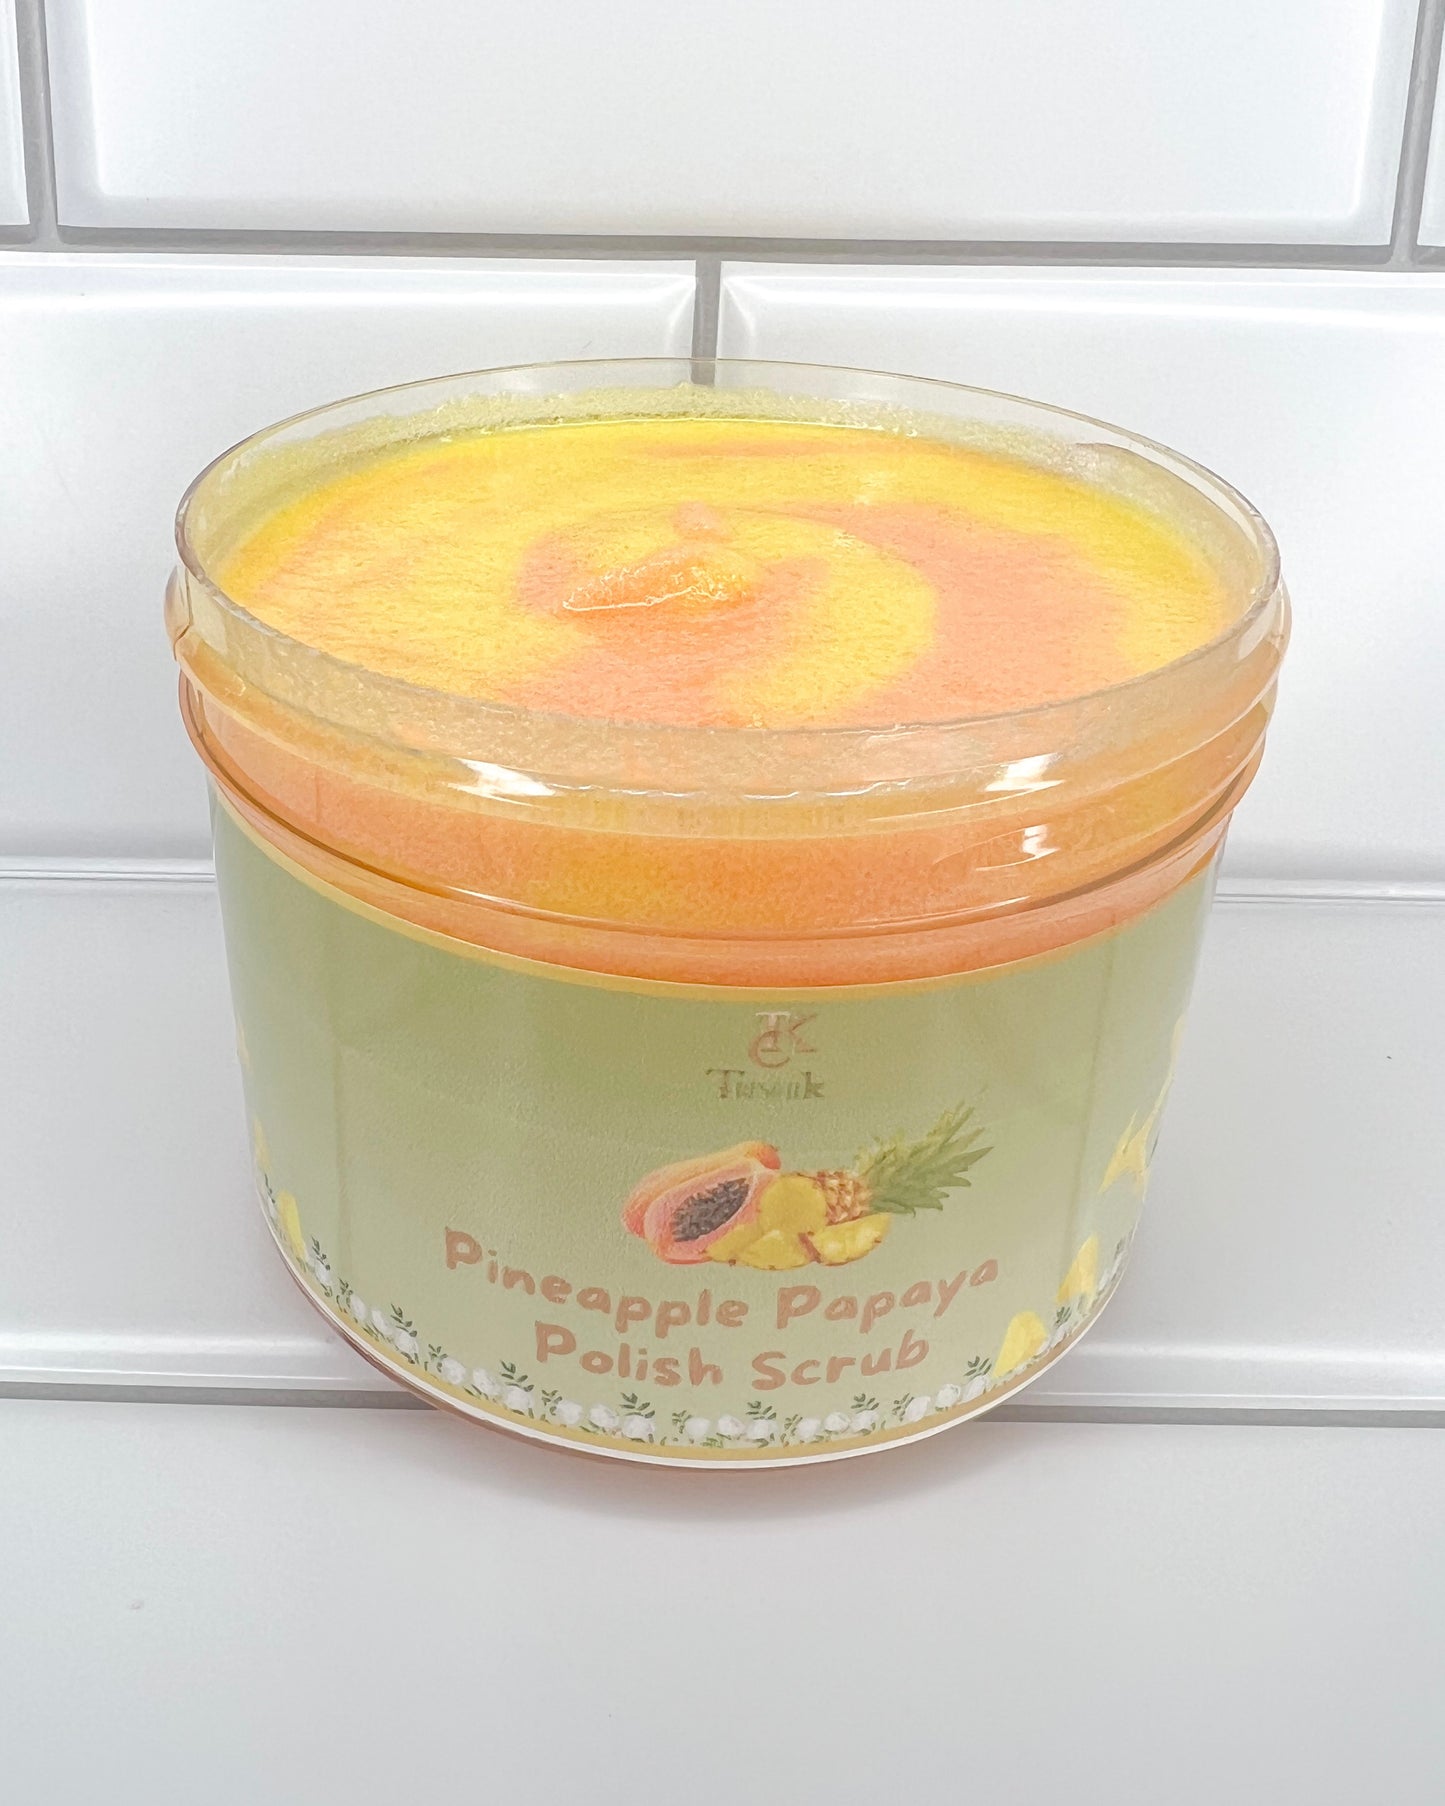 Pineapple Papaya Body Polish